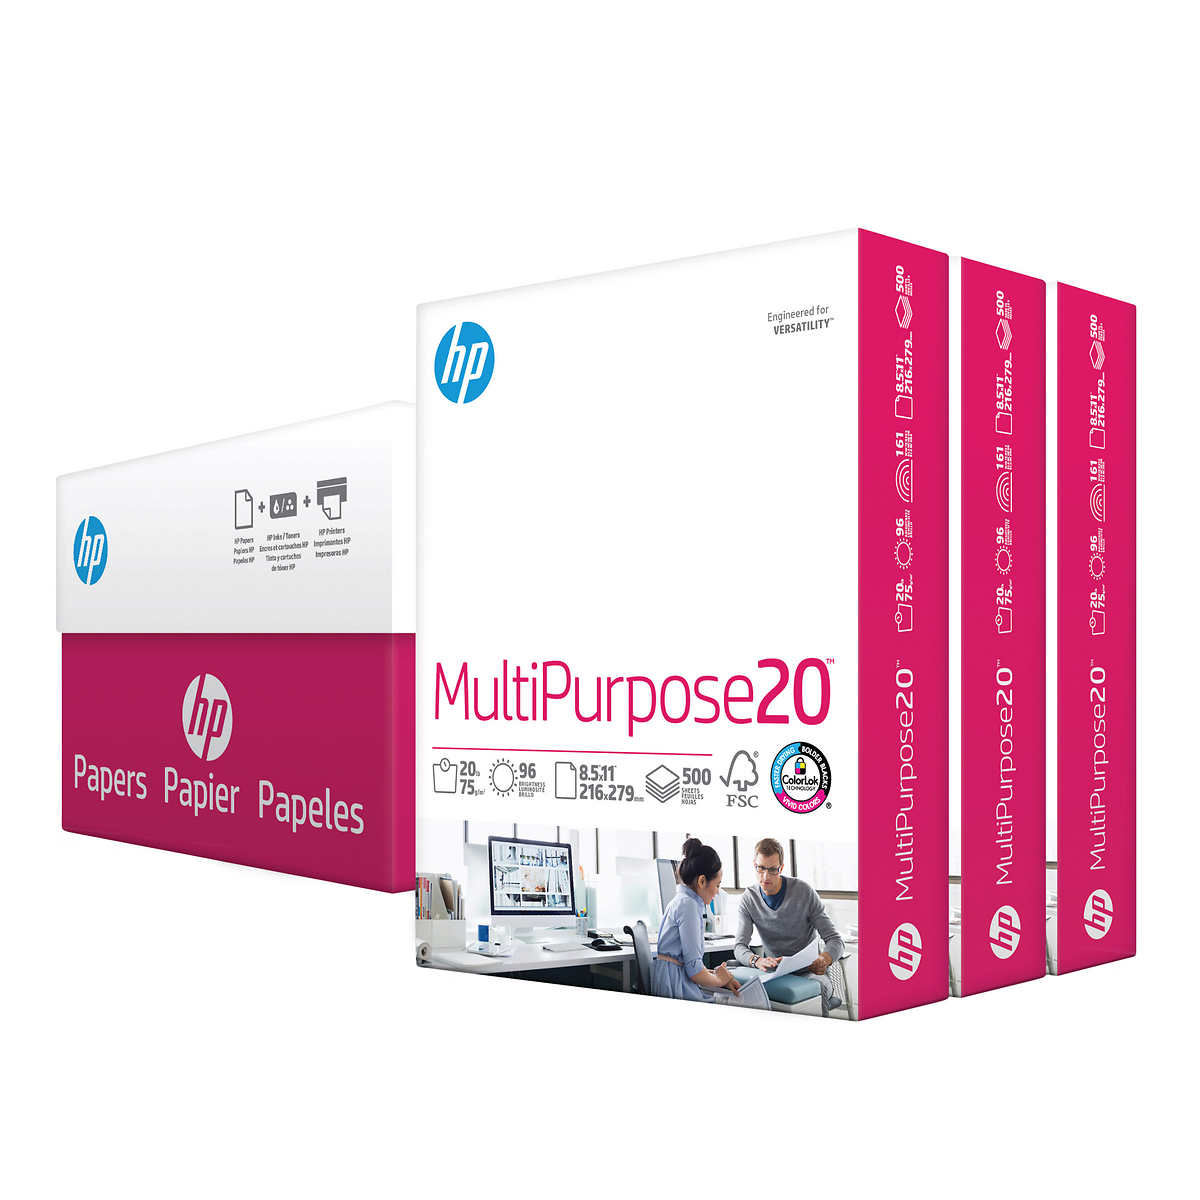 HP Printer Paper 8.5x11 MultiPurpose 20 lb 1 Ream 500 Sheets 96 Bright Made in 